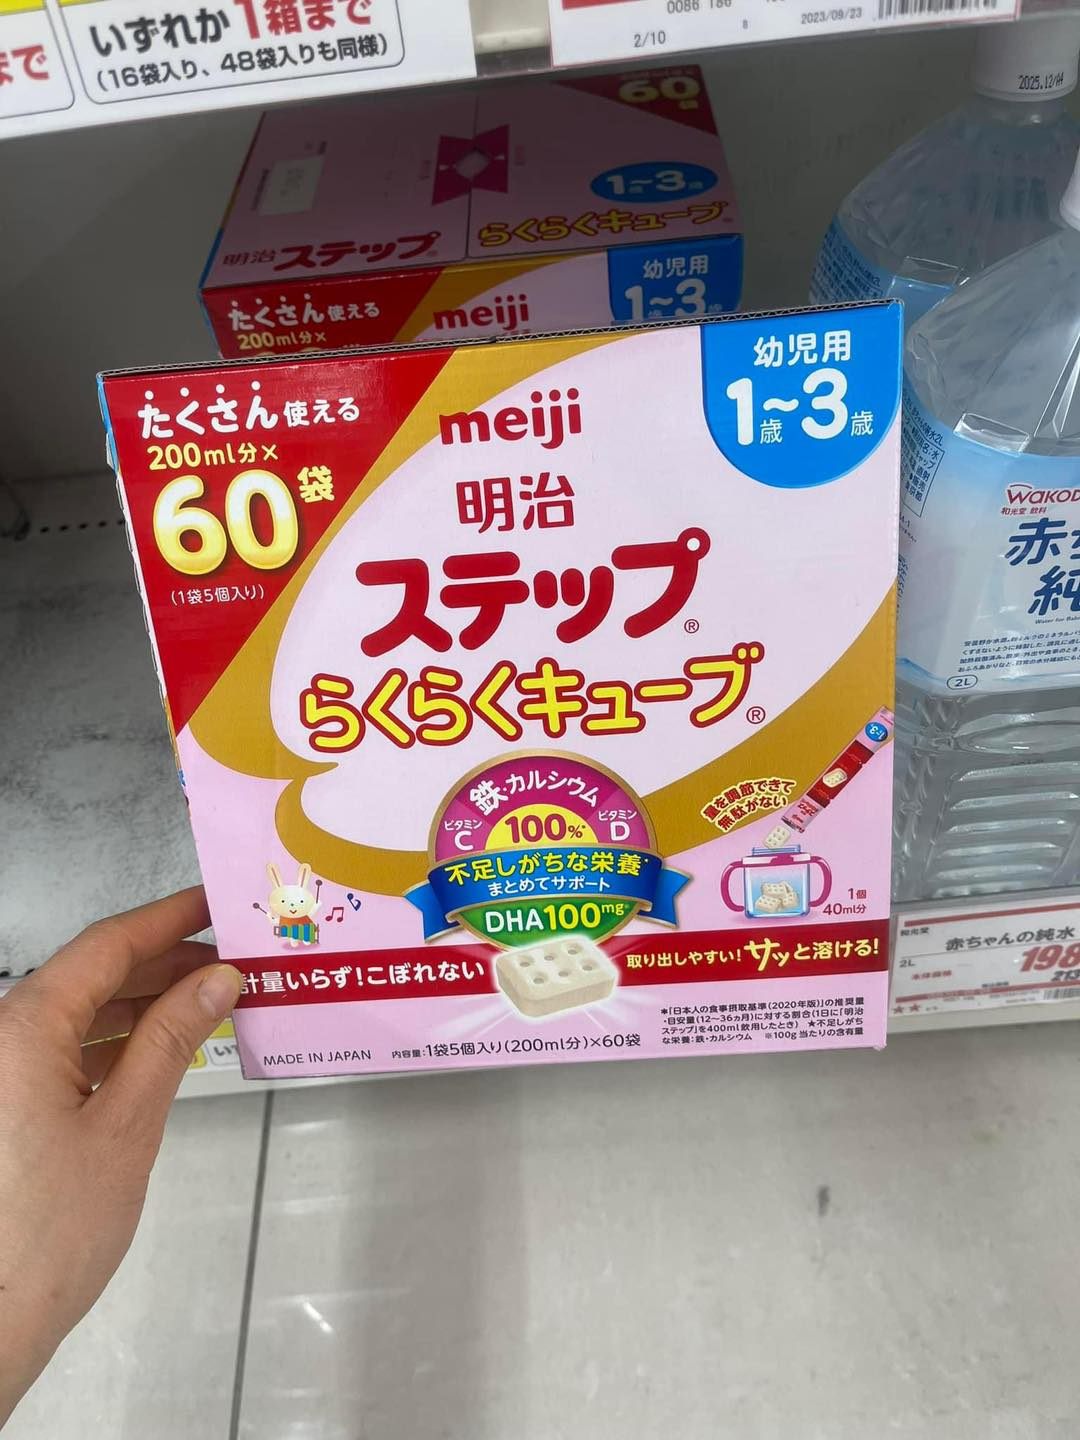 Sữa Meiji Cho Bé 0-1 tuổi